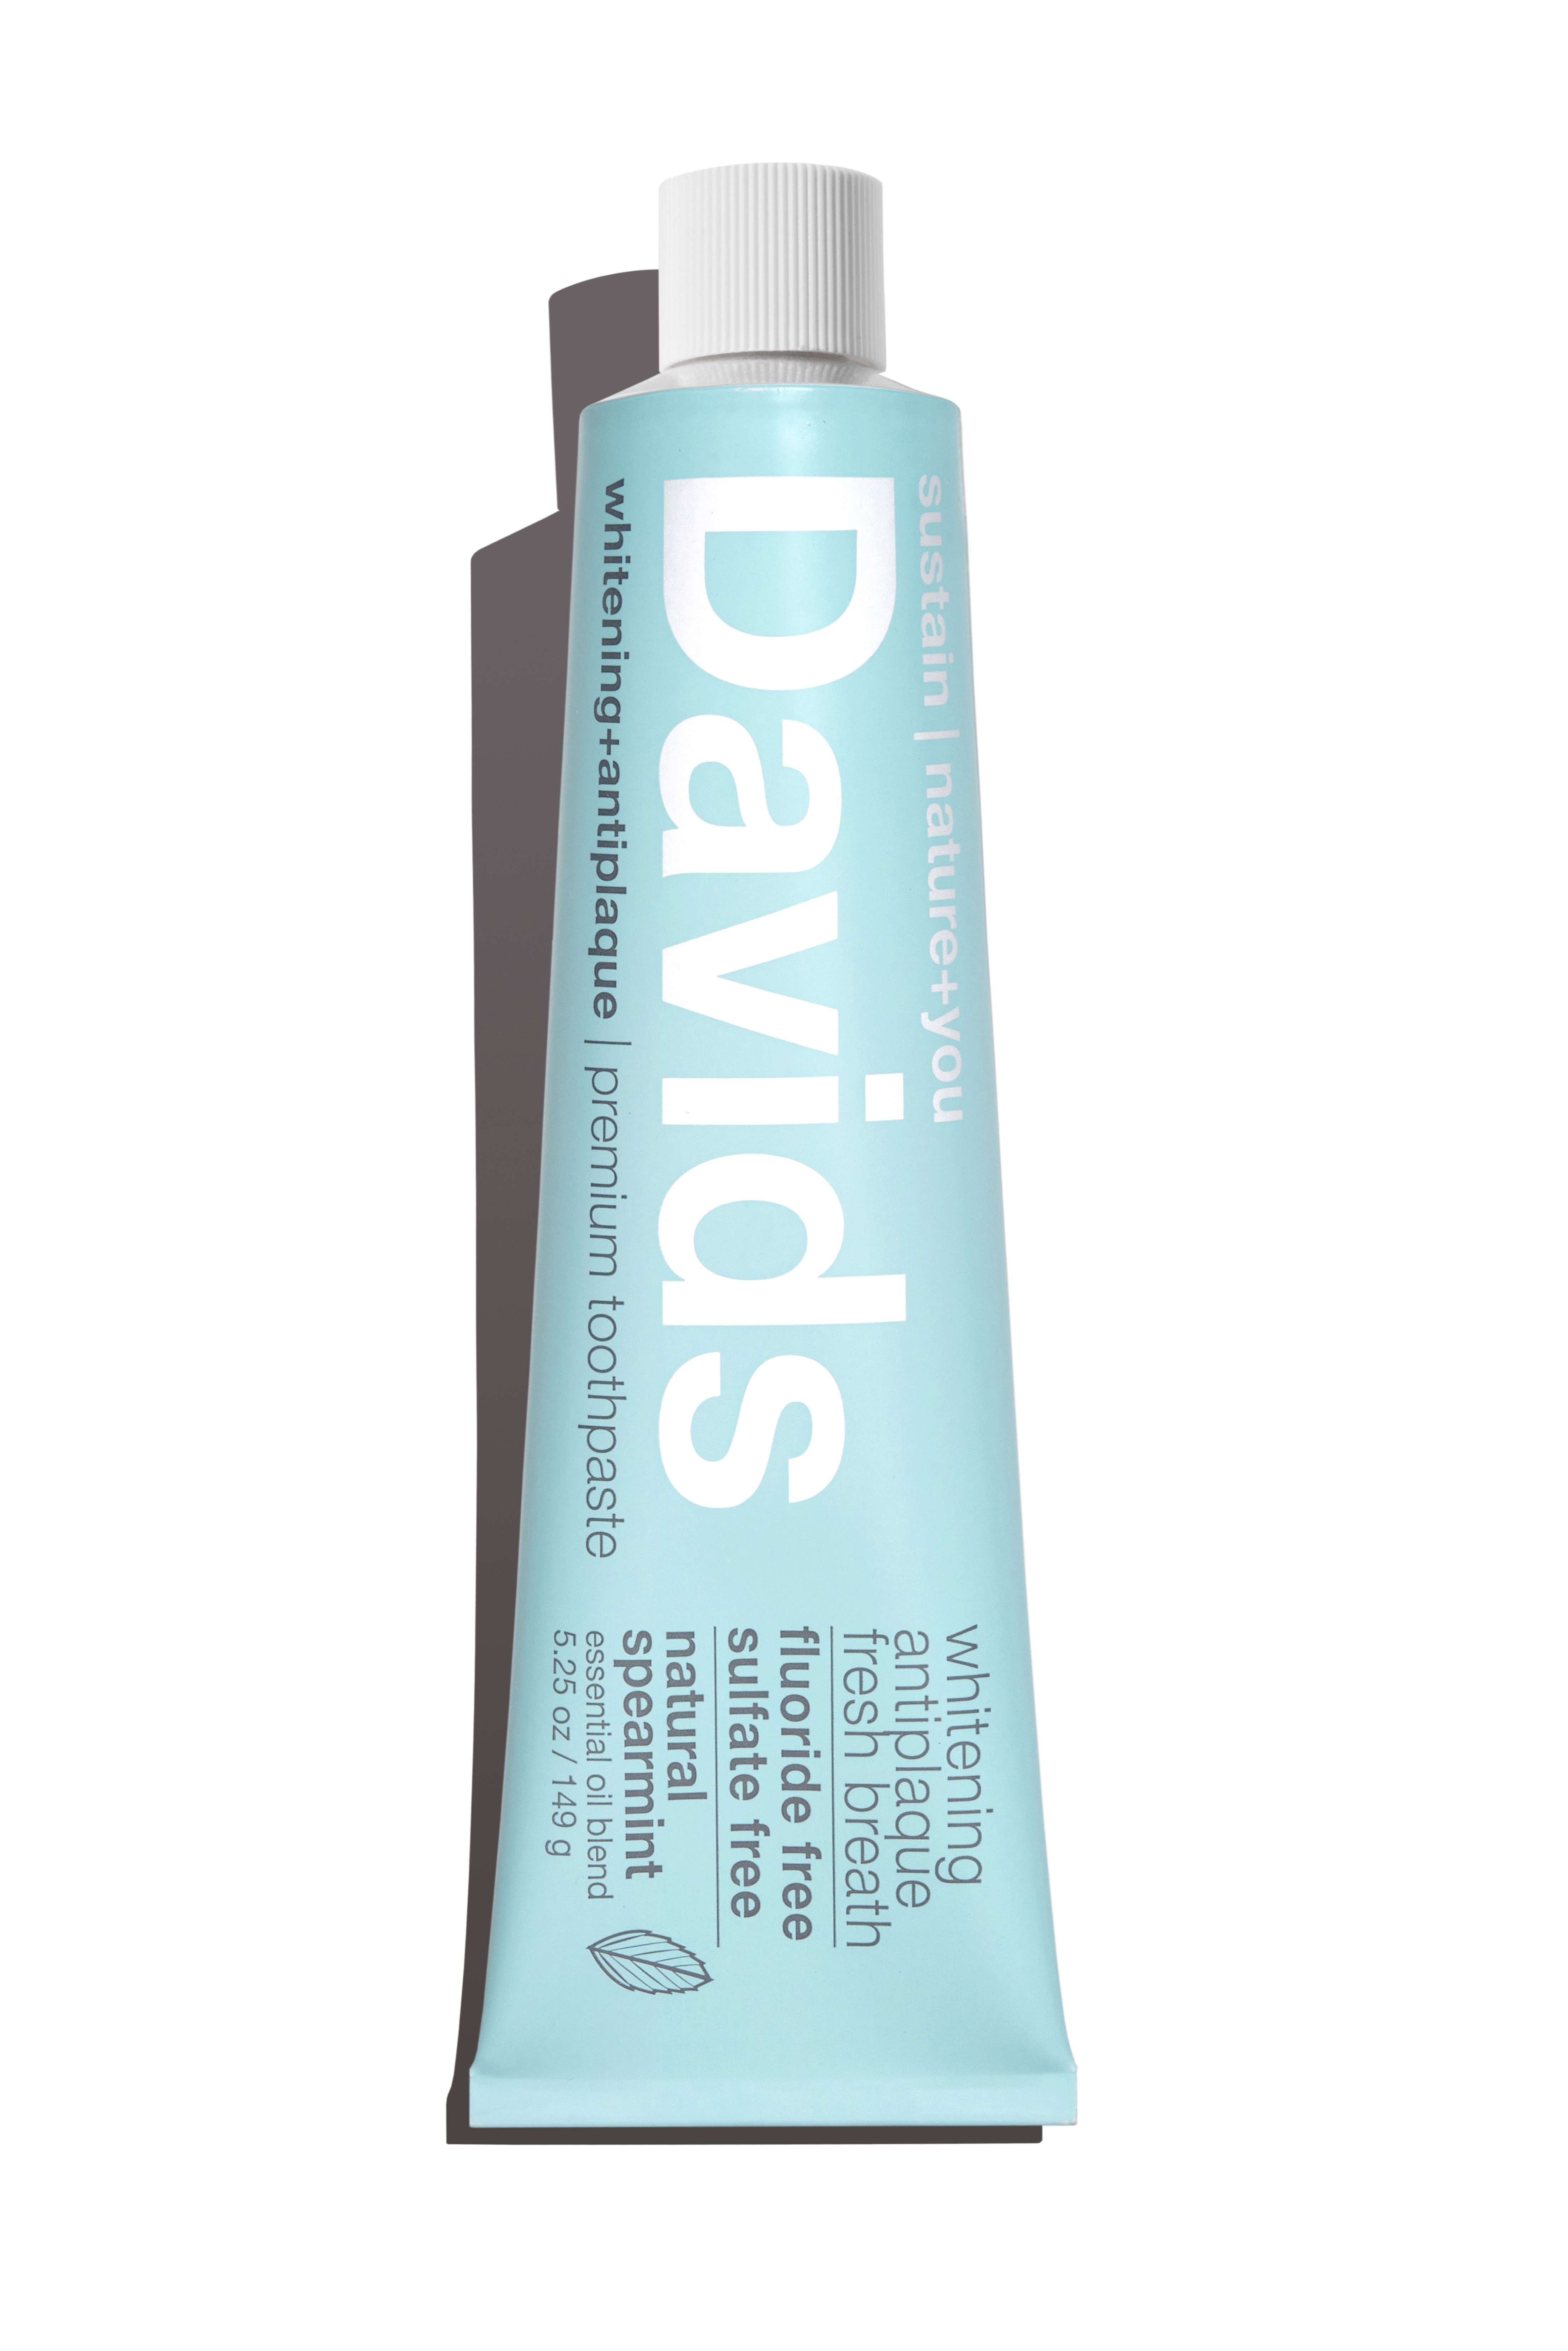 Davids Premium Natural Toothpaste, Natural Spearmint